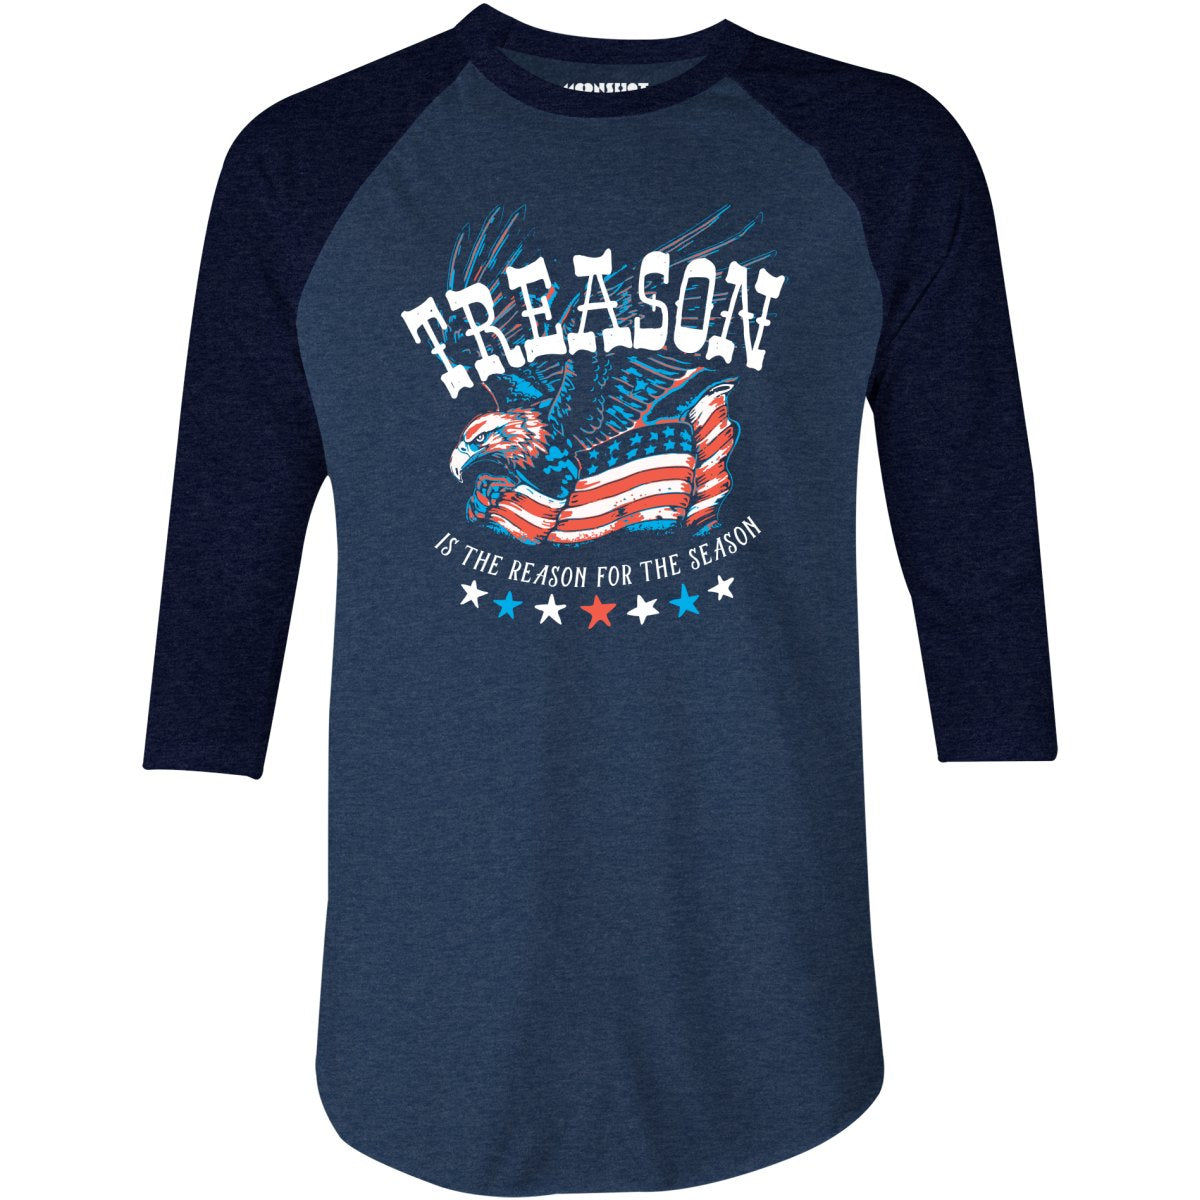 Treason is the Reason for the Season - 3/4 Sleeve Raglan T-Shirt